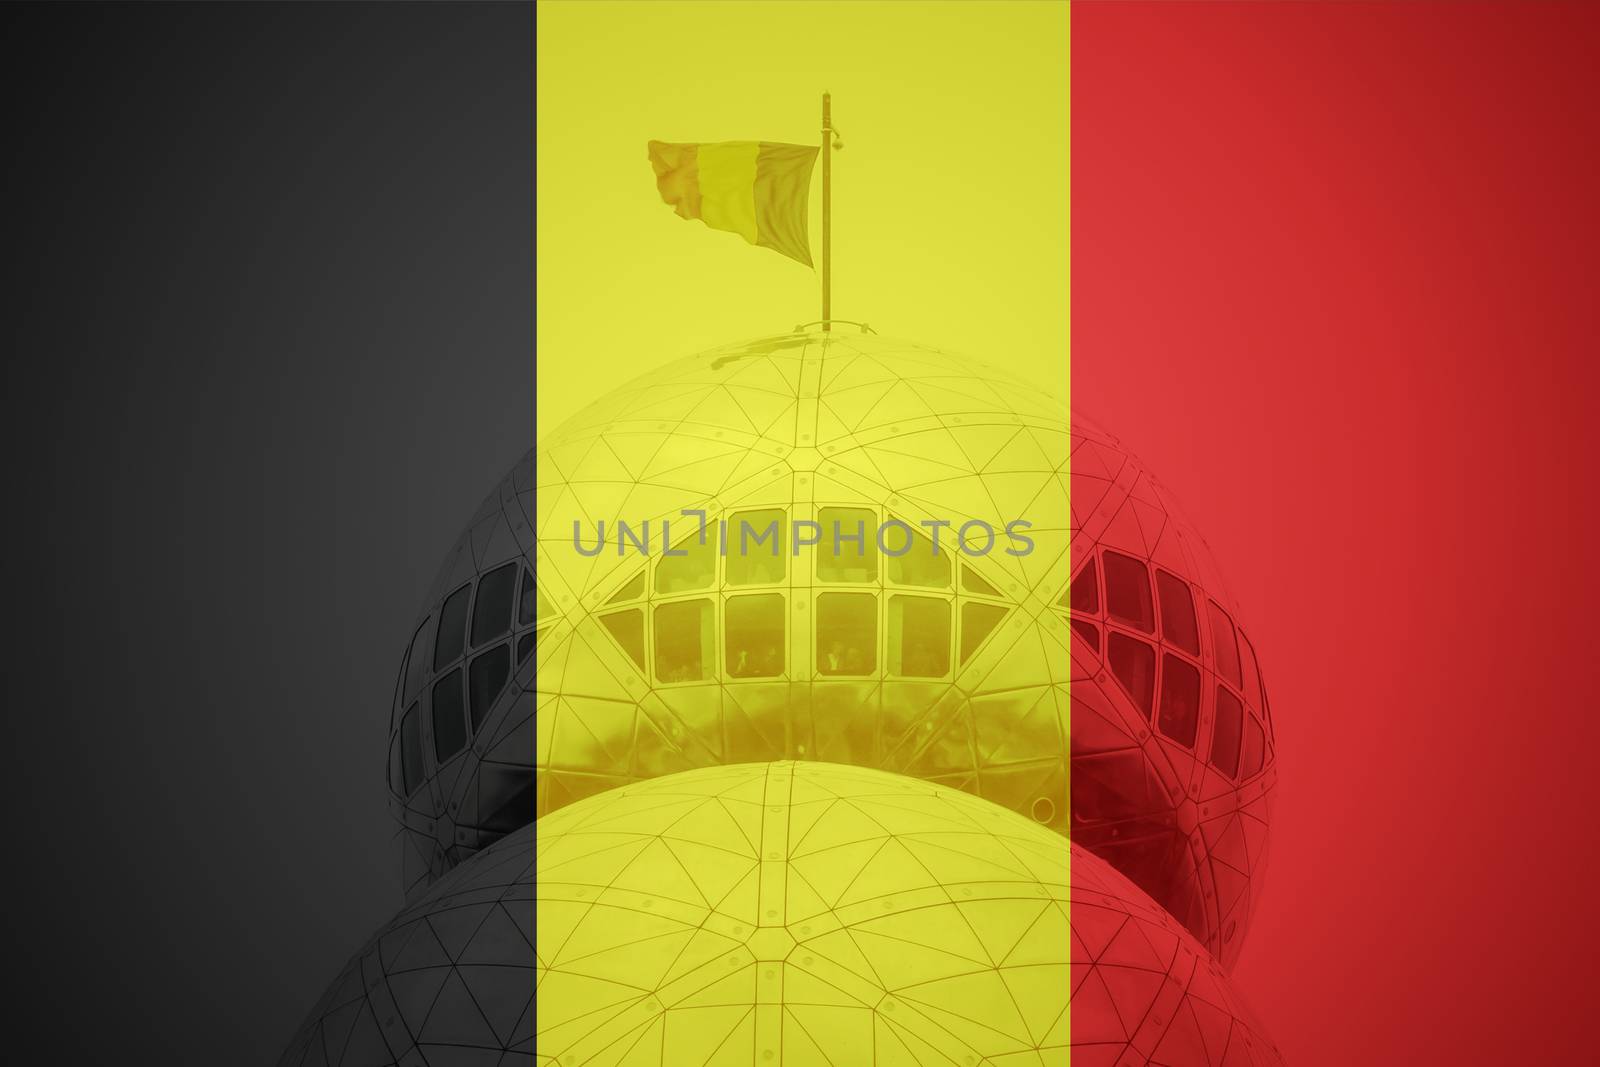 Flag of Belgium in minimalistic design and high quality